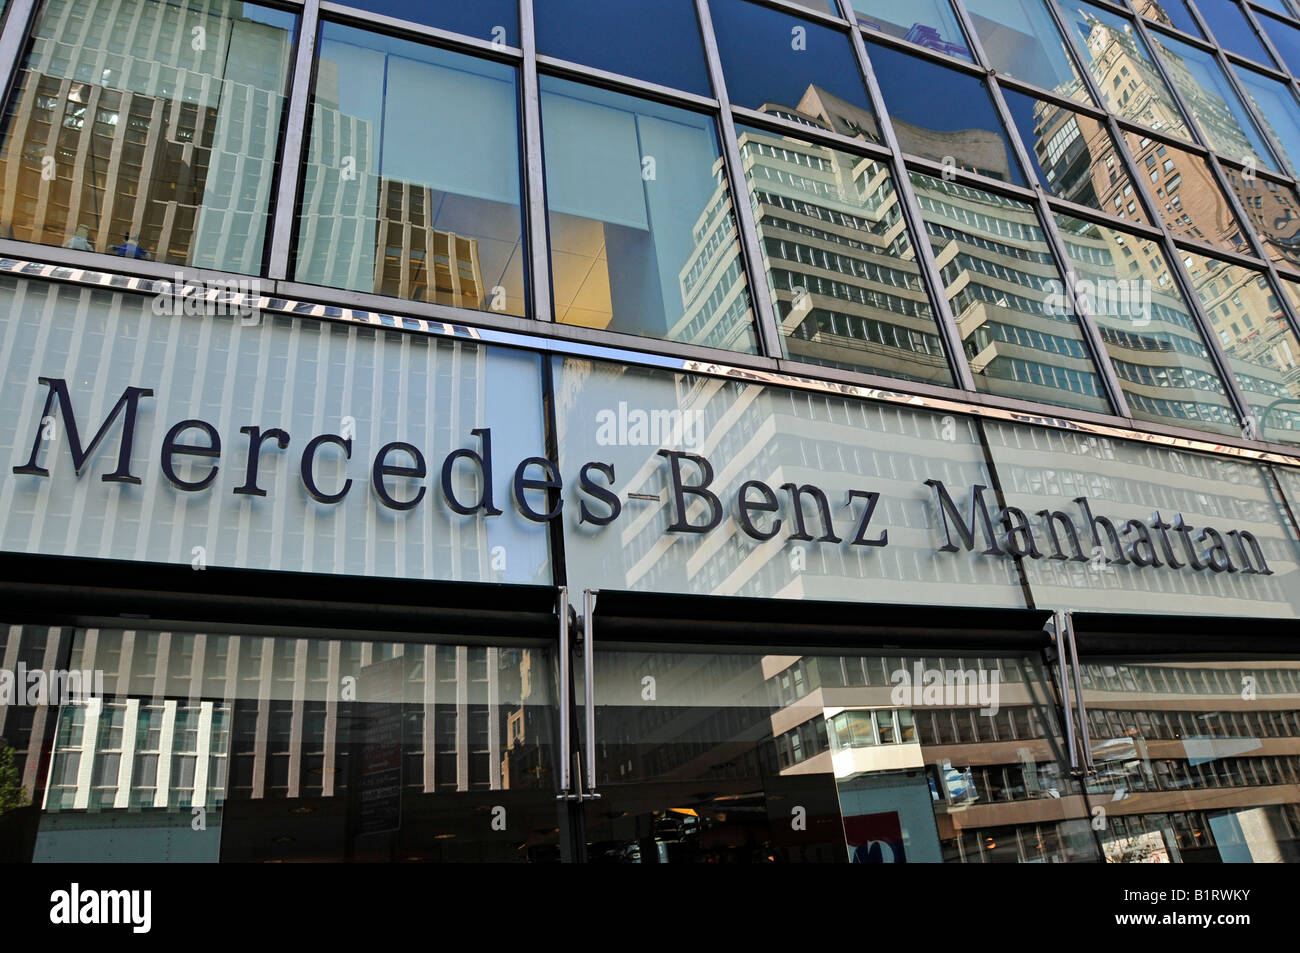 Branch office of Mercedes Benz, Manhattan, New York City, USA Stock Photo